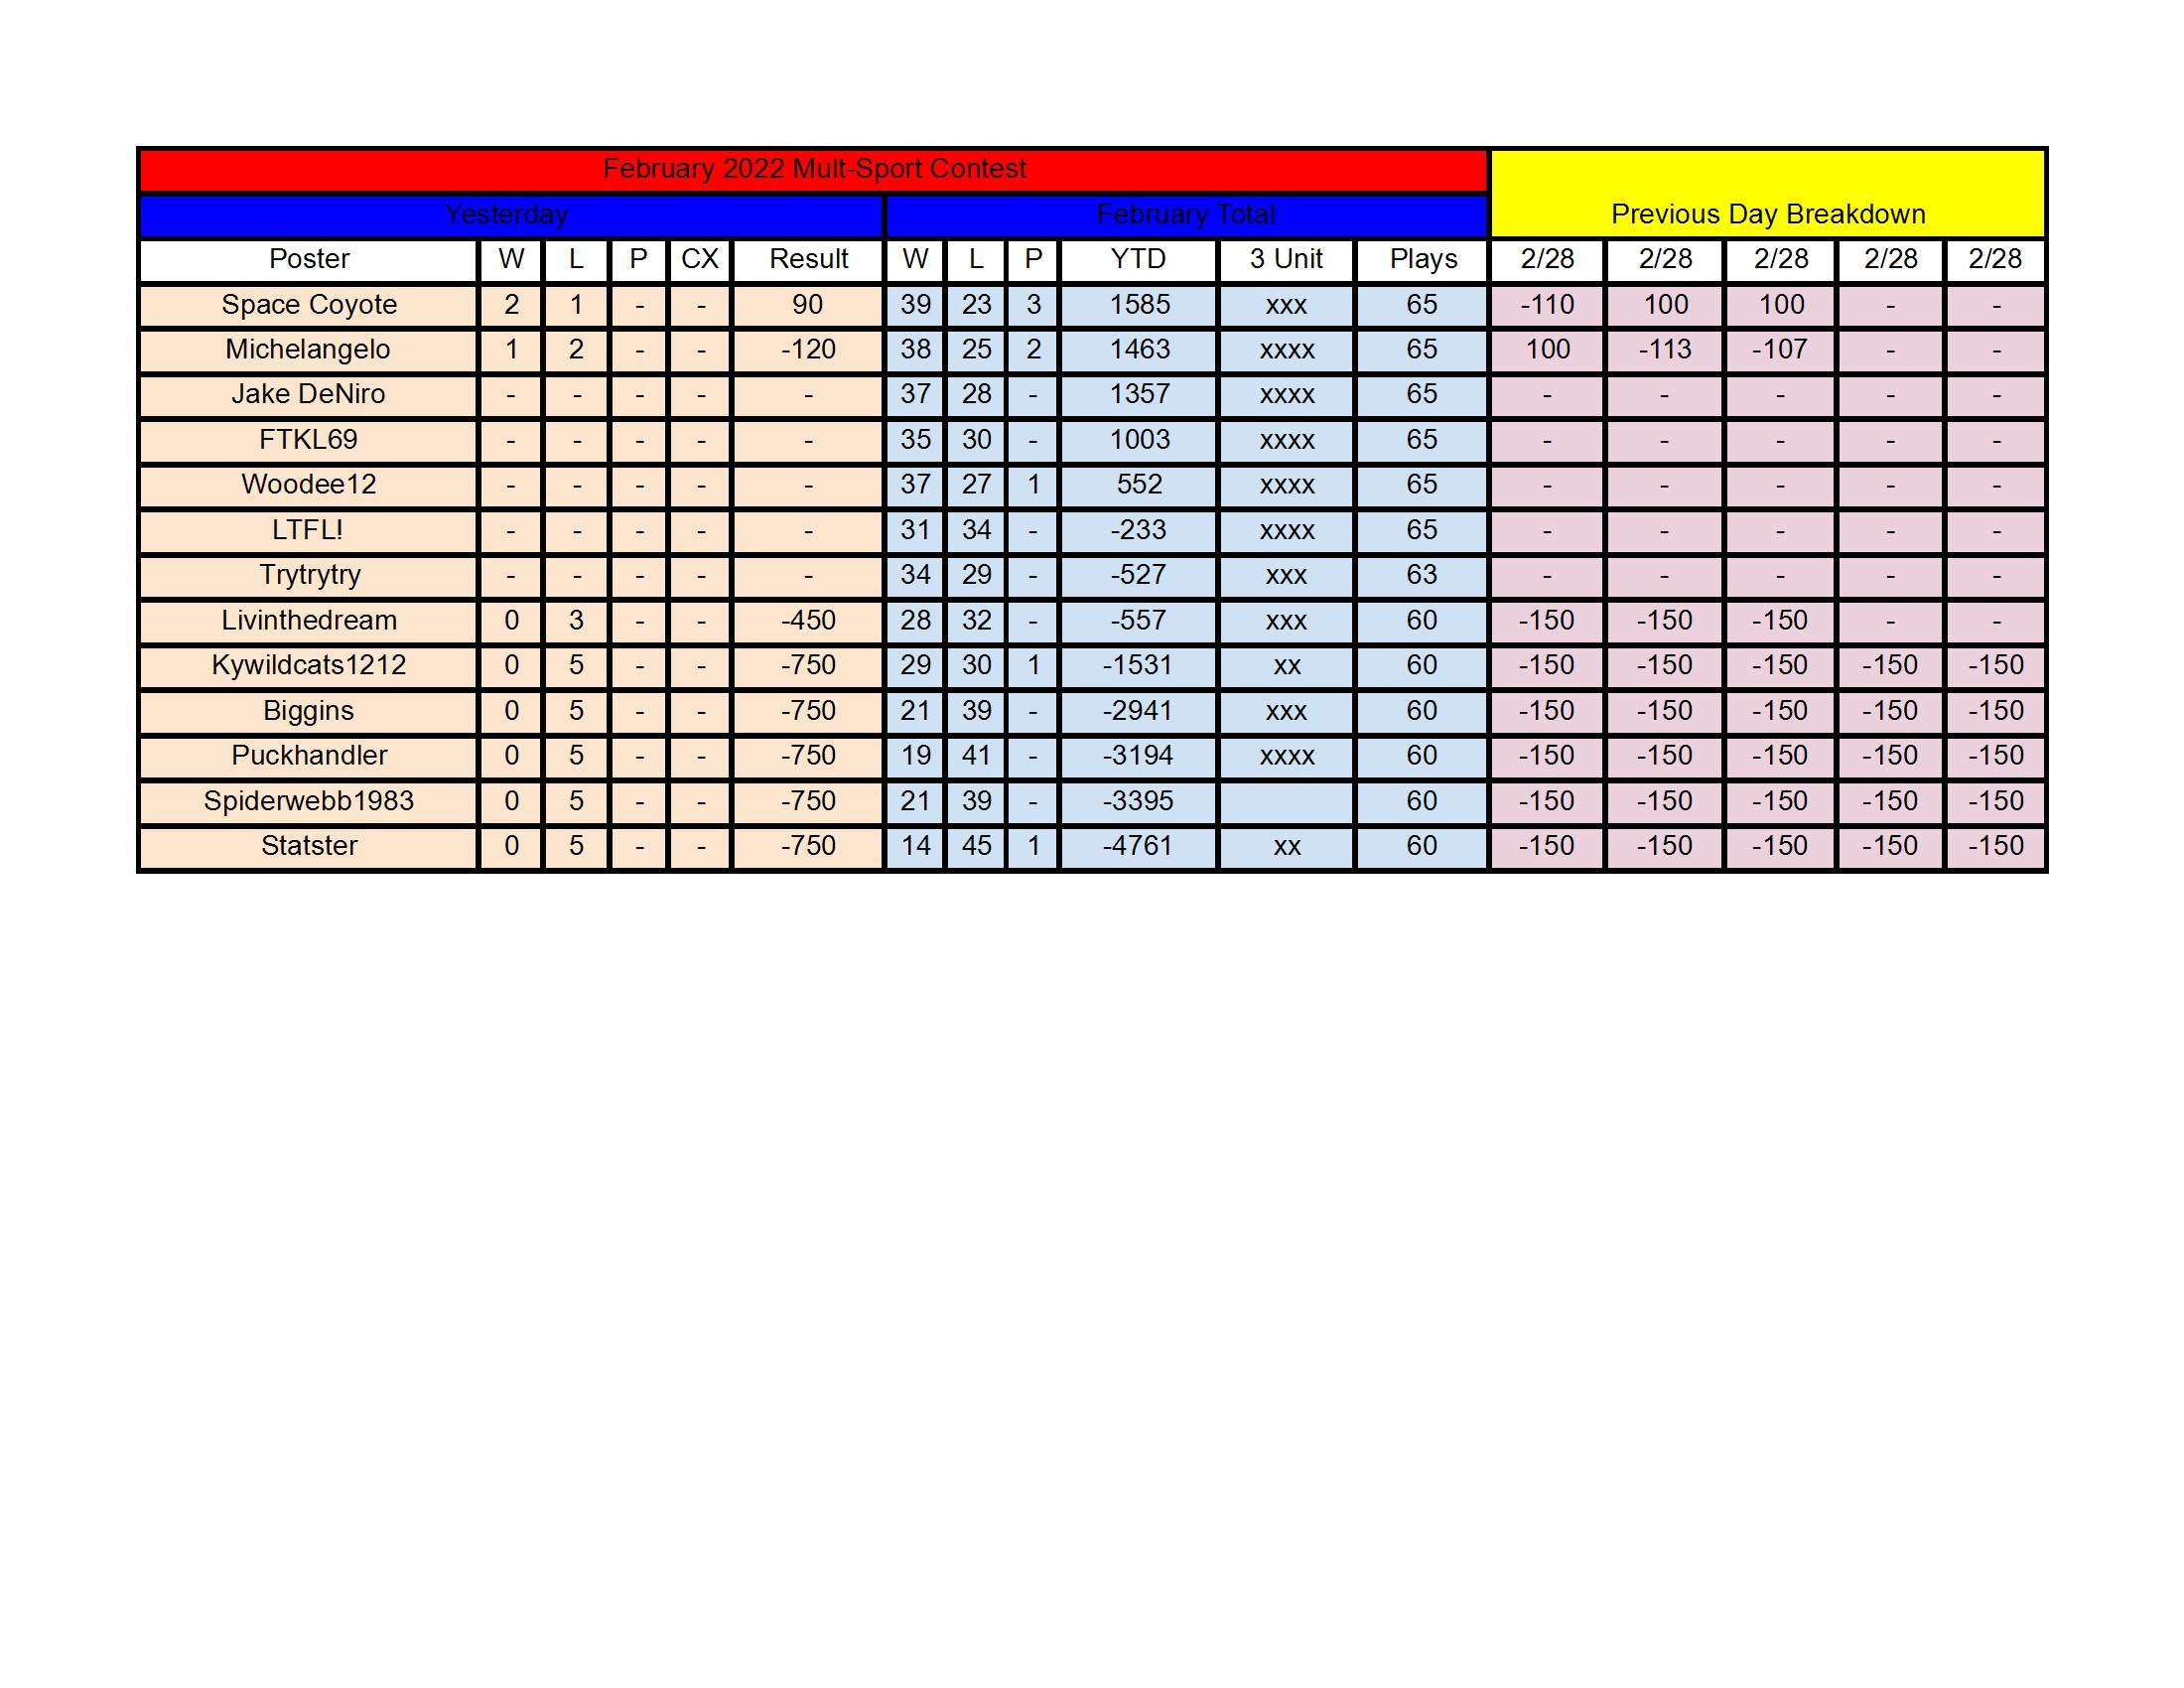 February Standings - 2_28 conv 1.jpeg